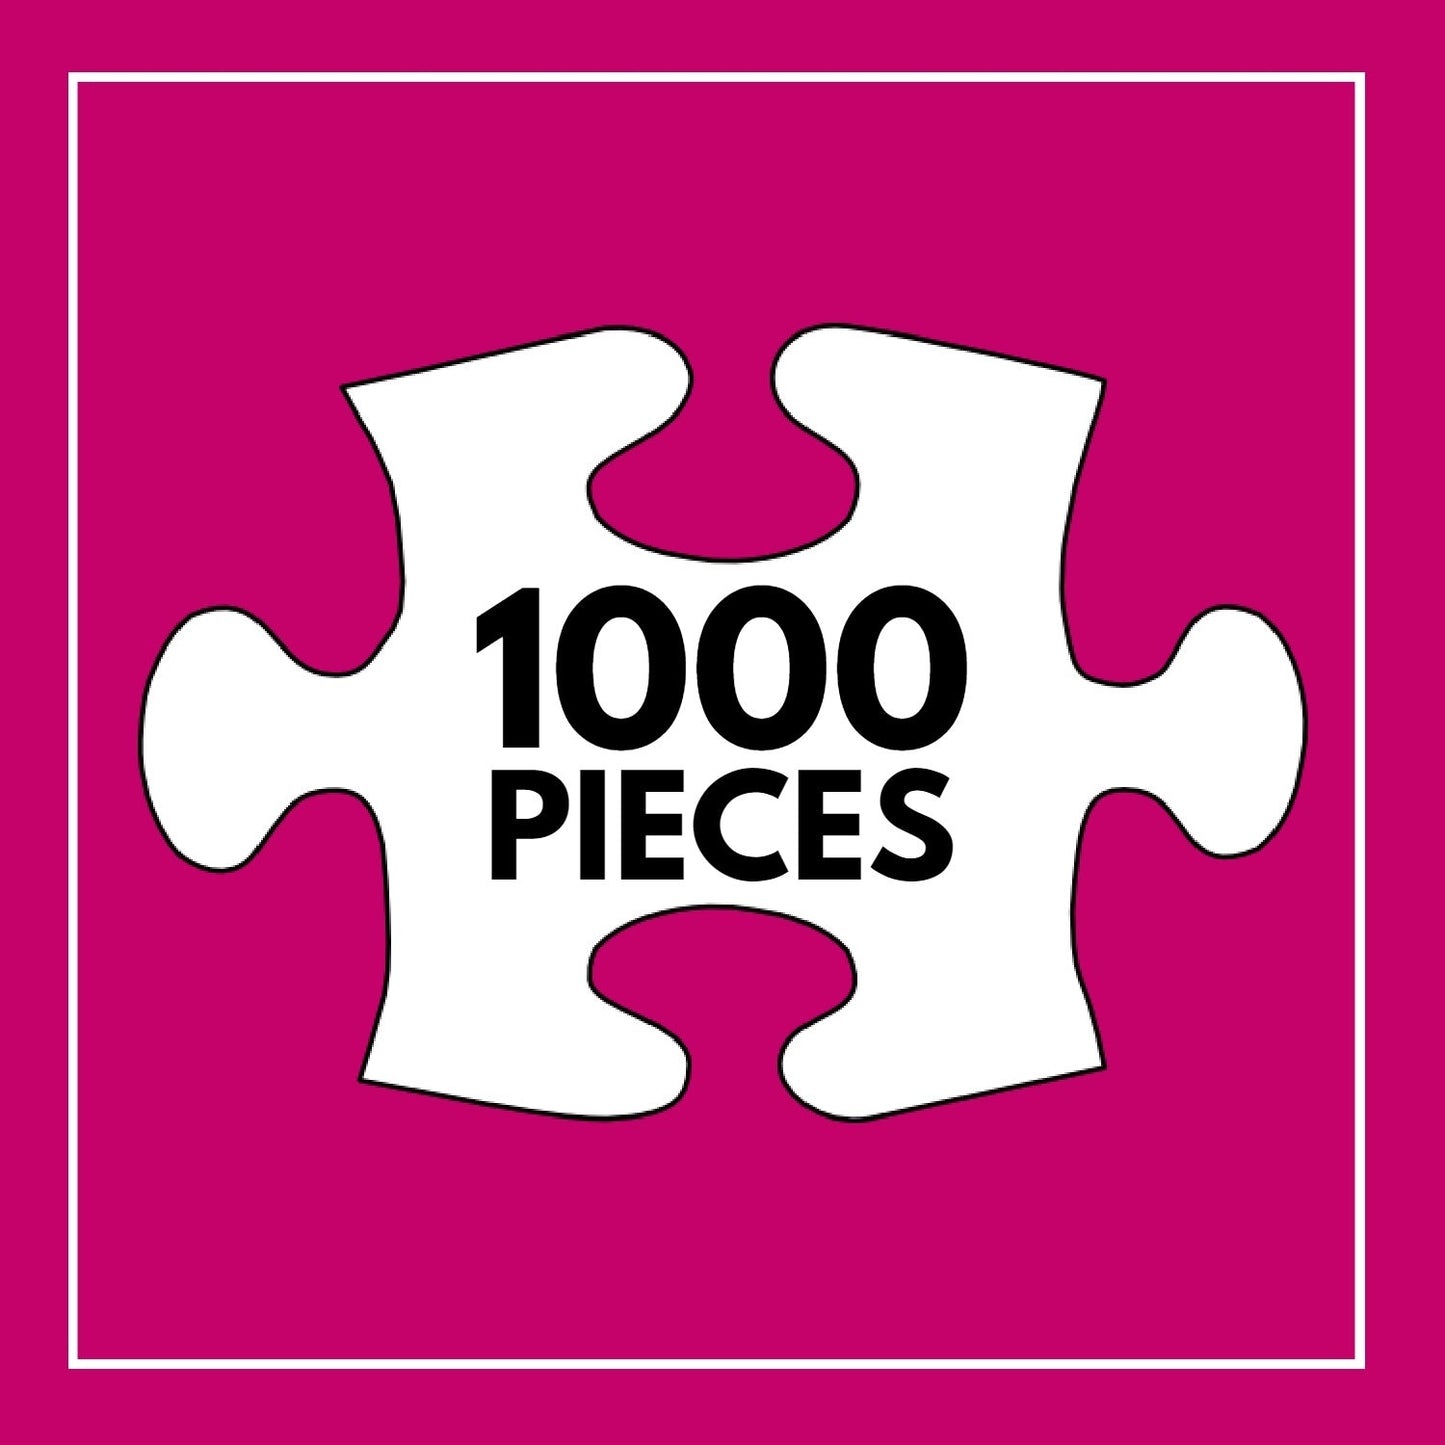 Majestic Mums: Bouquet of Brilliance - 1000 Piece Jigsaw Puzzle